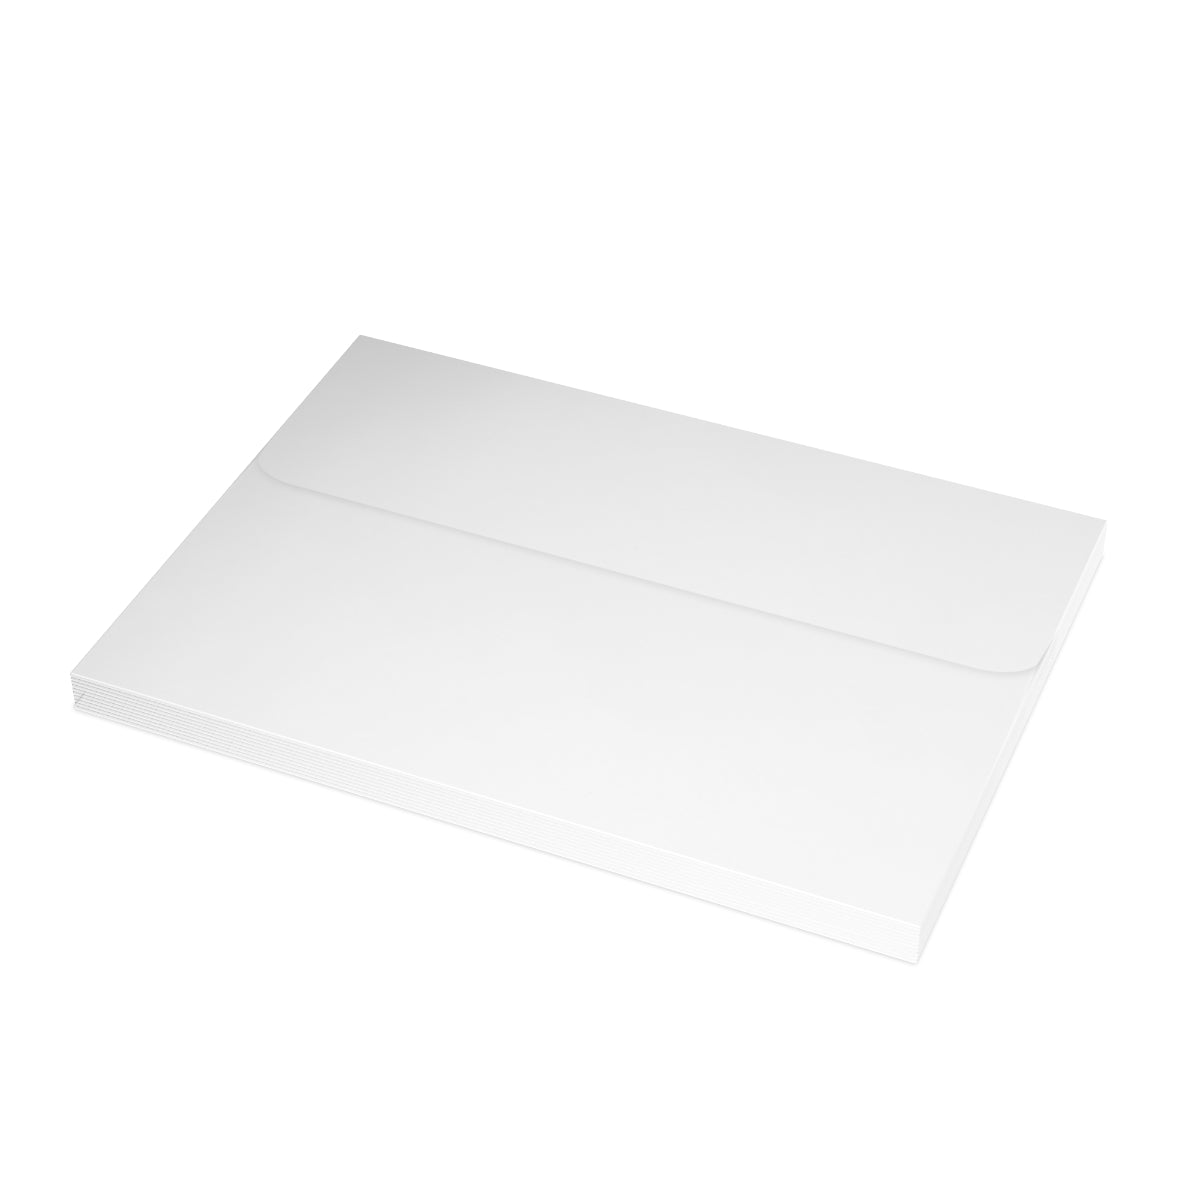 San Diego Folded Matte Notecards + Envelopes  (10pcs)